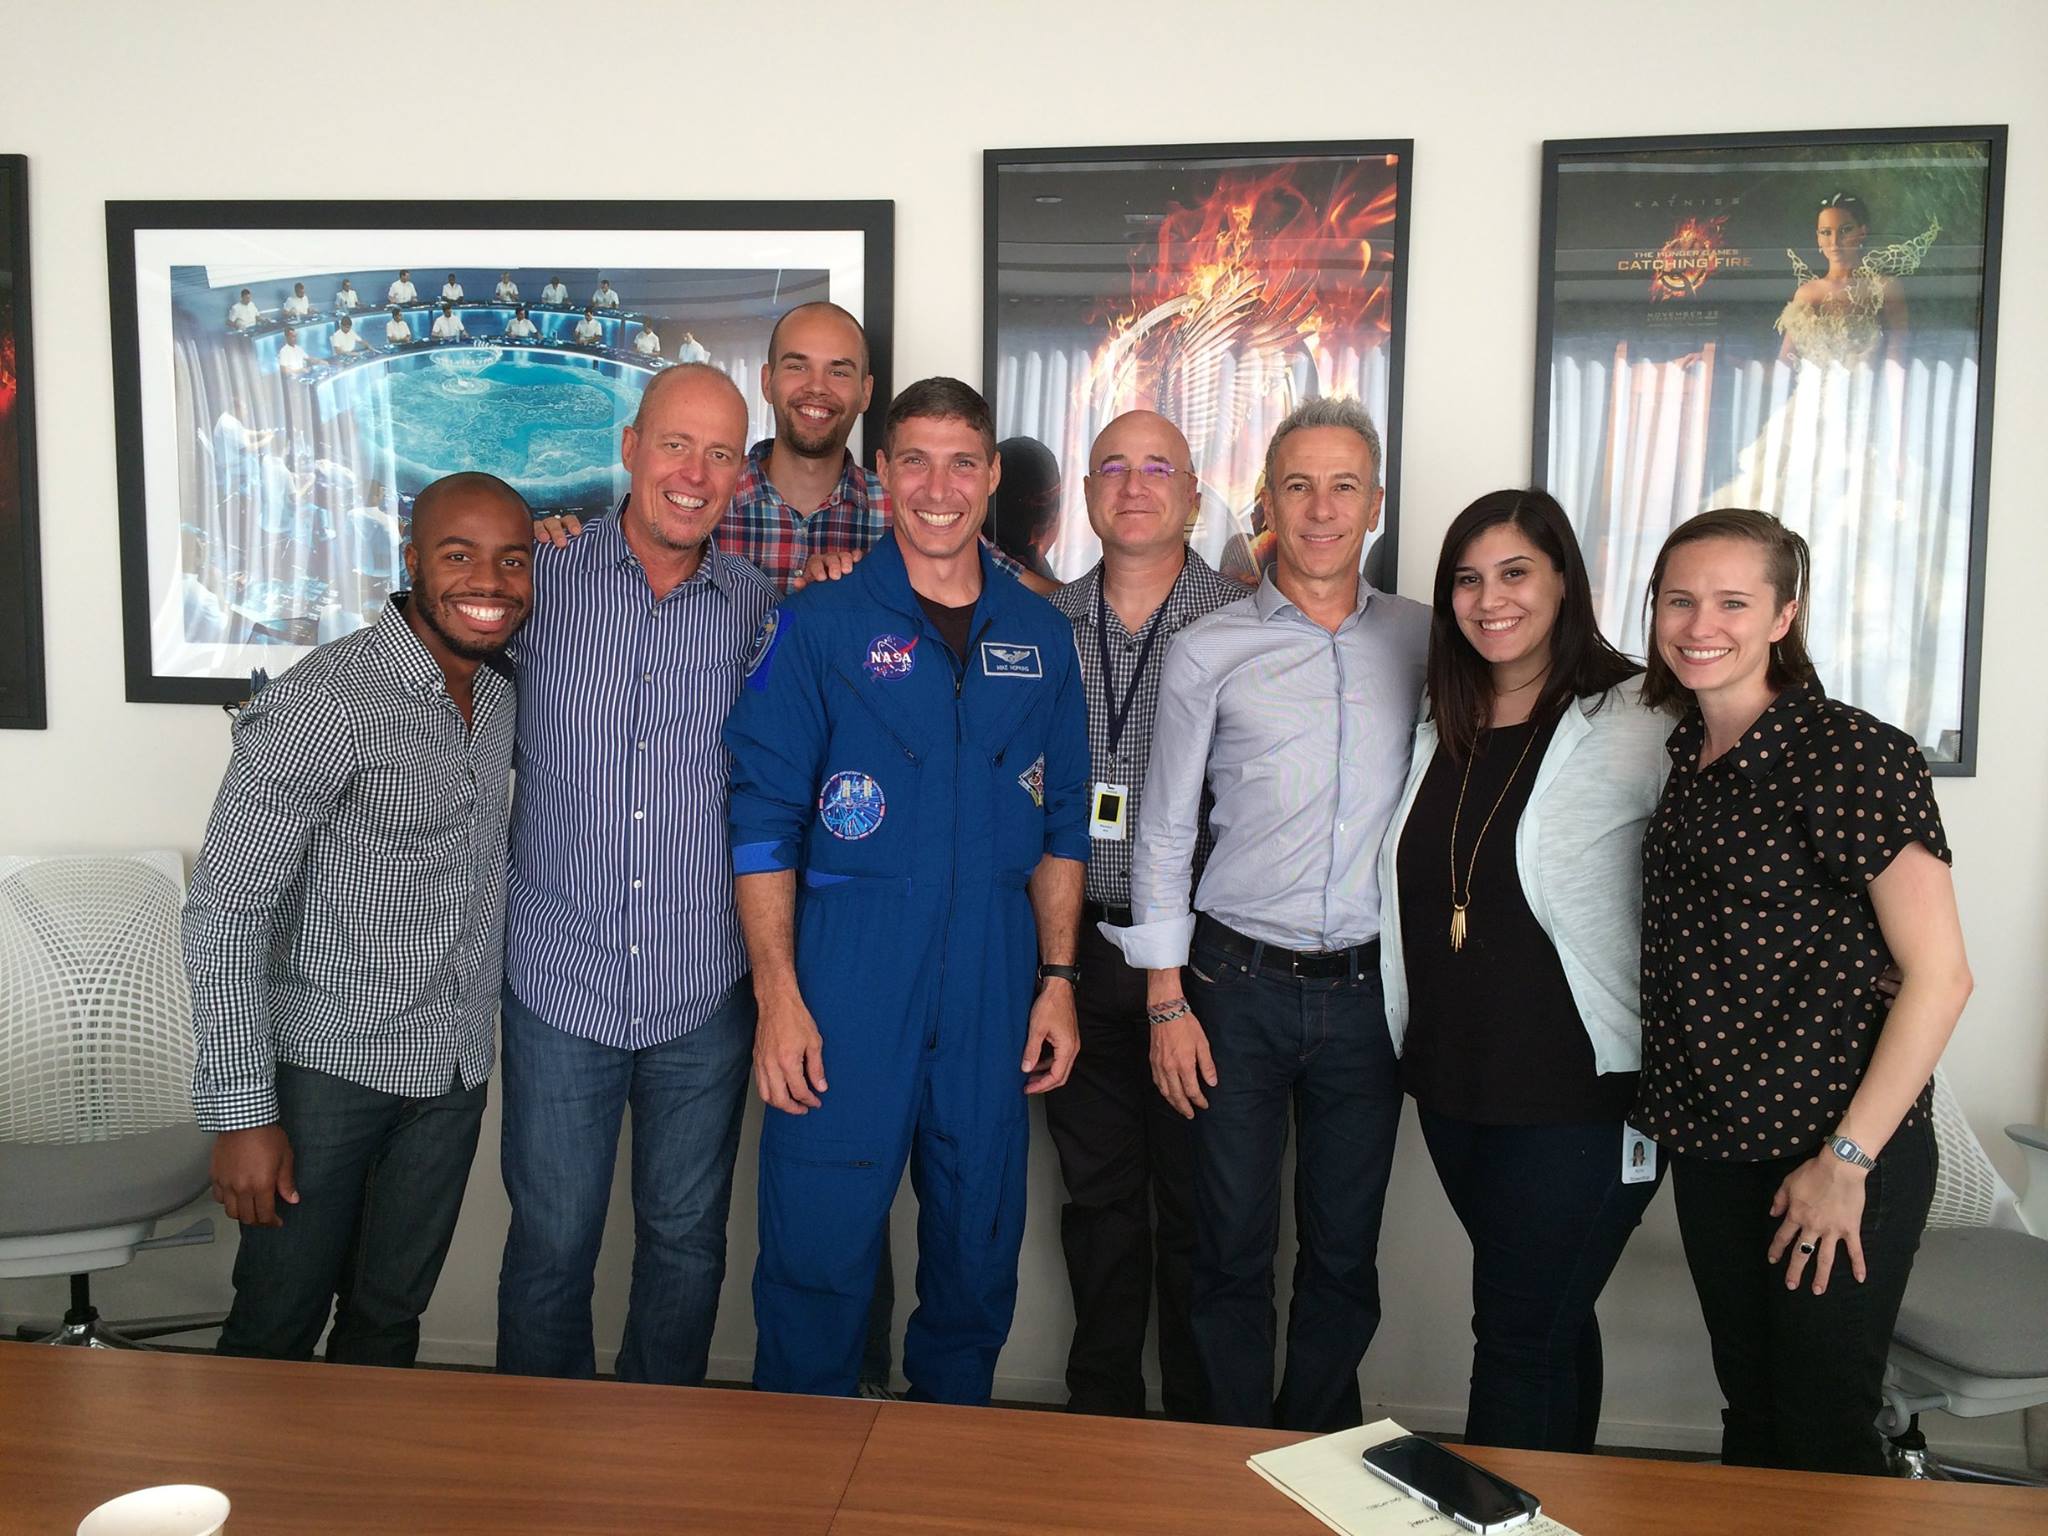 Lionsgate post-production with astronaut Michael Hopkins